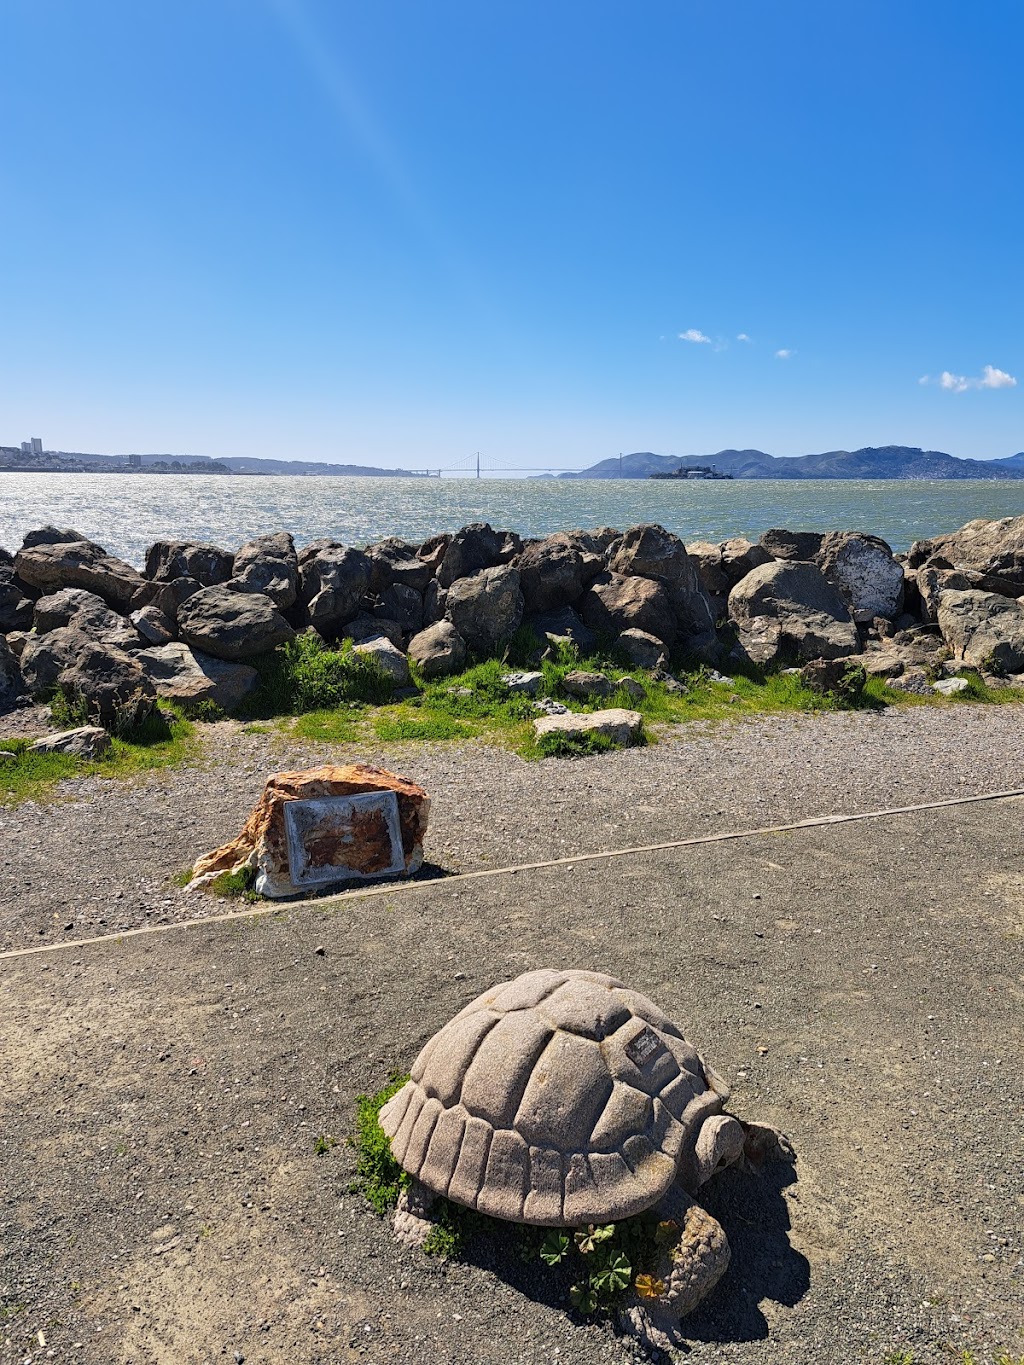 Treasure Island Dog Park | San Francisco, CA 94130 | Phone: (415) 274-0660